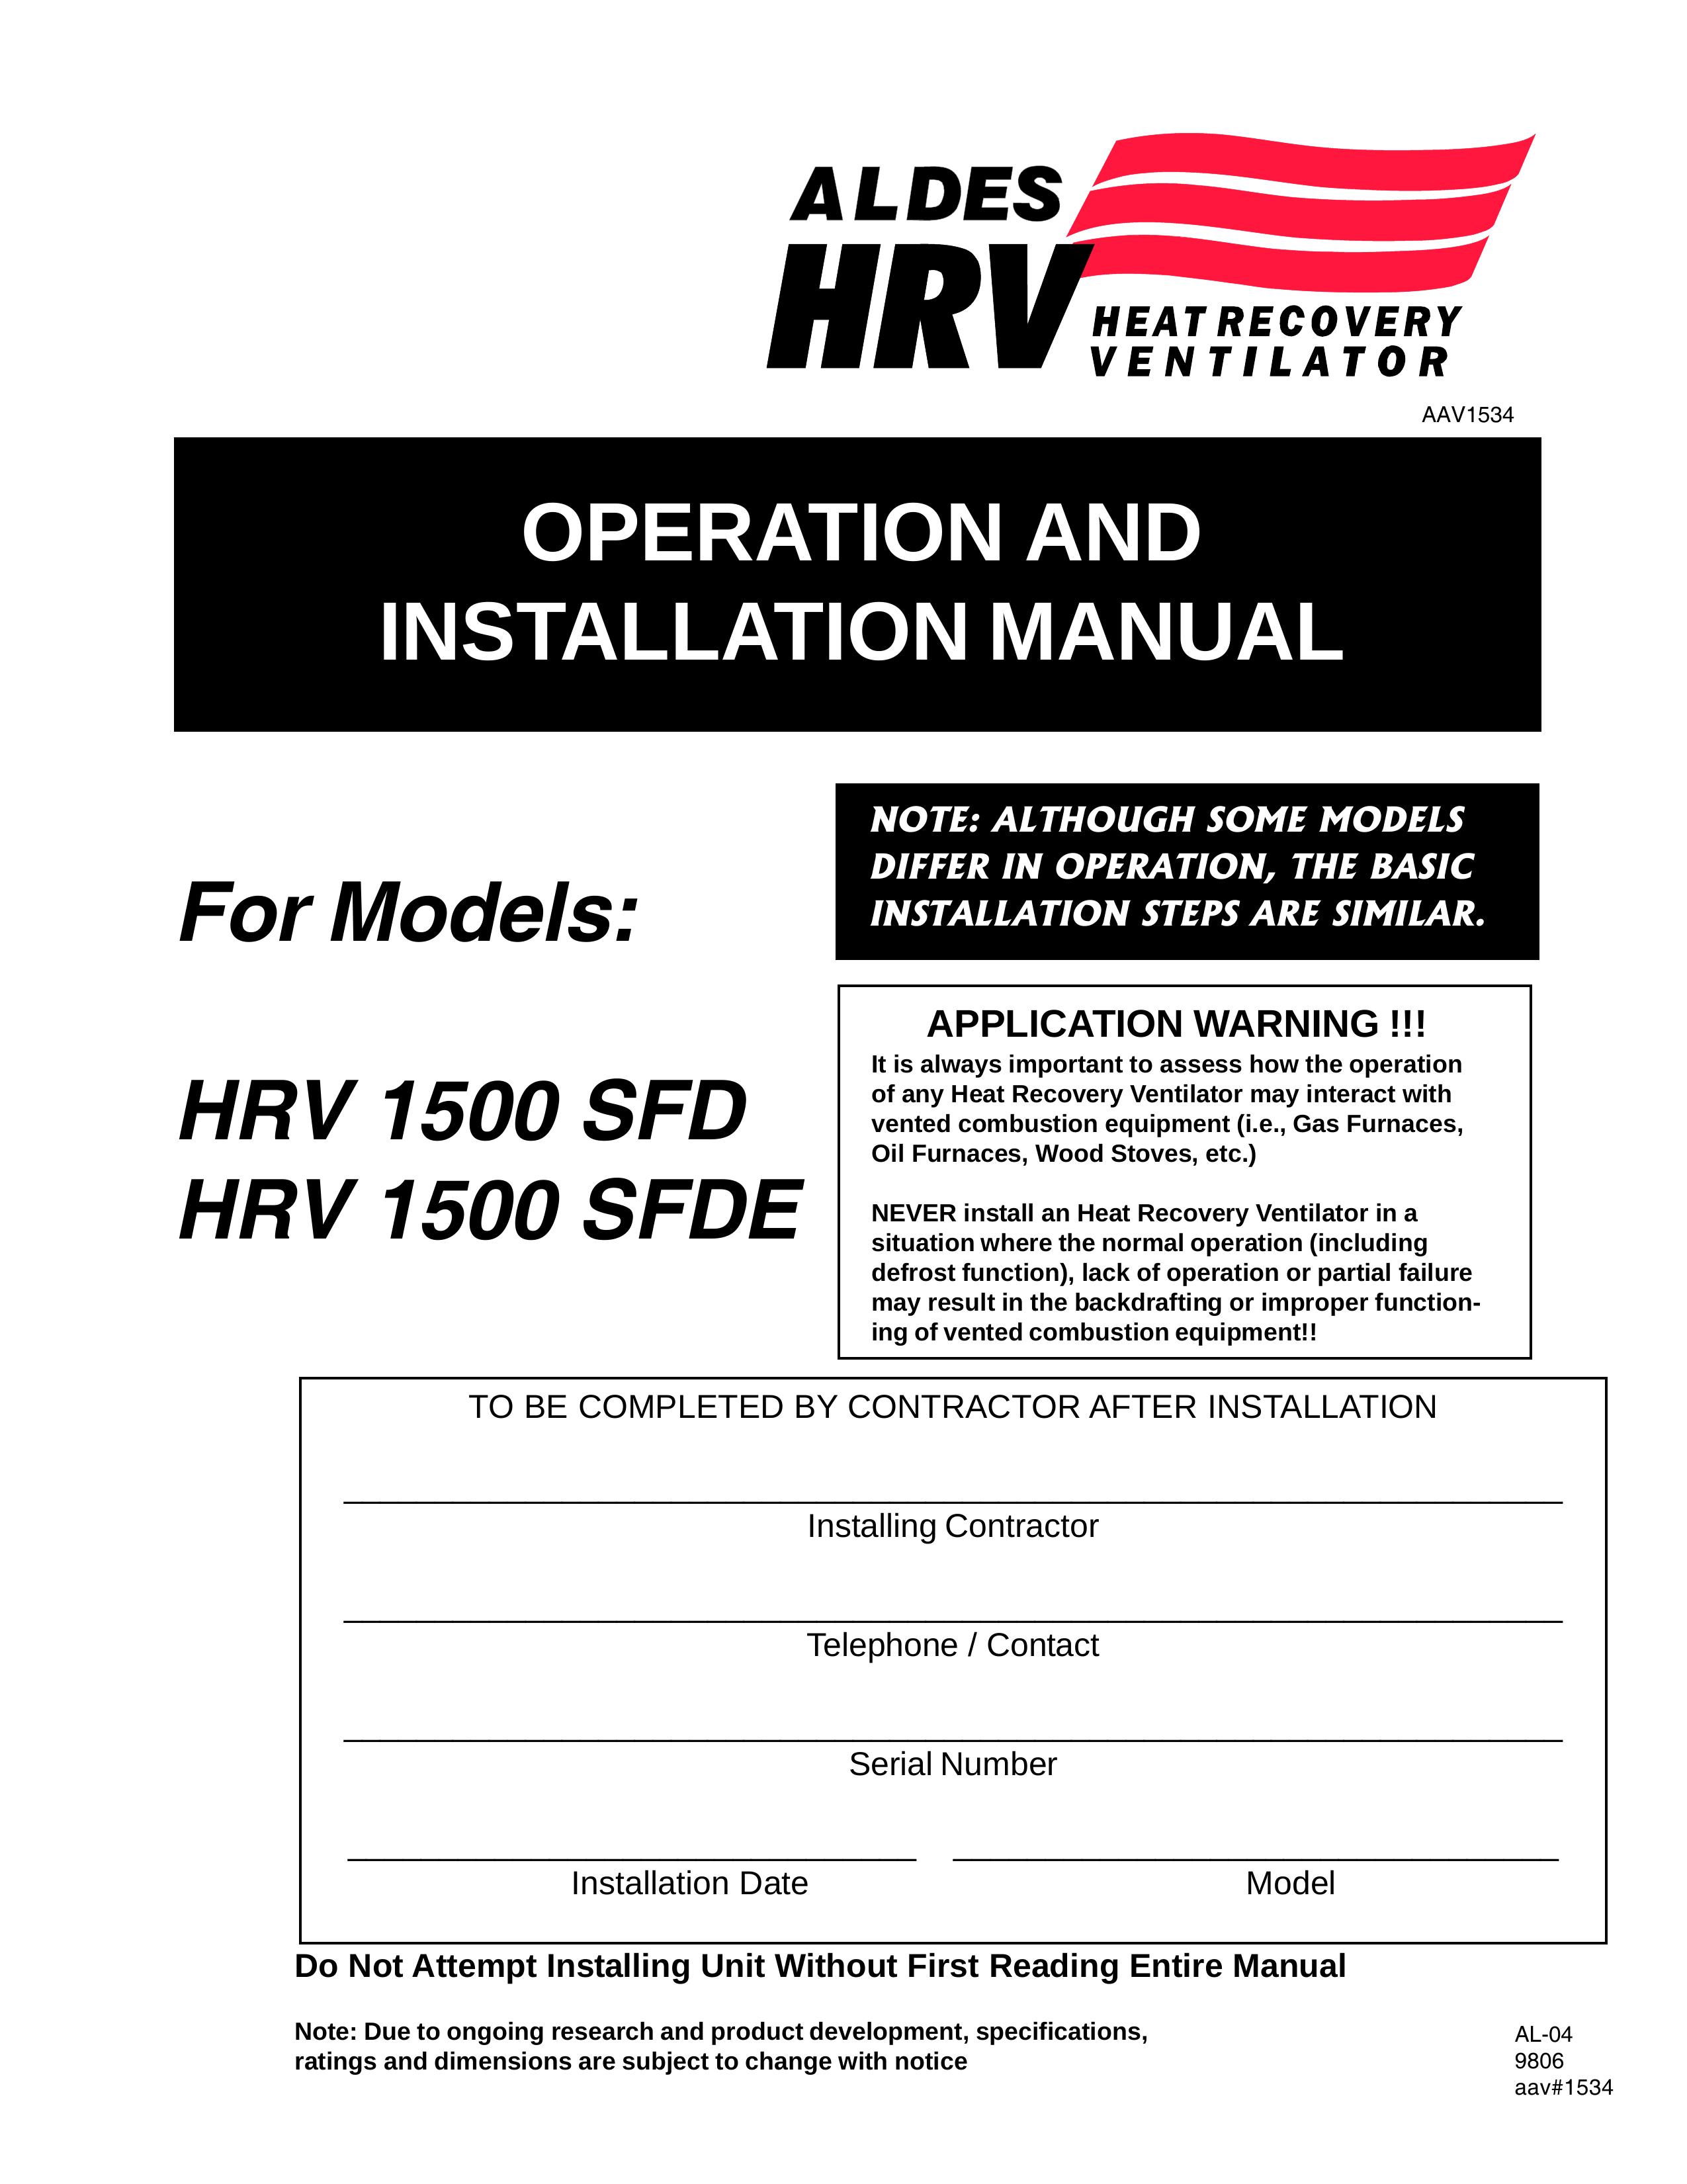 American Aldes HRV 1500 SFD Ventilation Hood User Manual